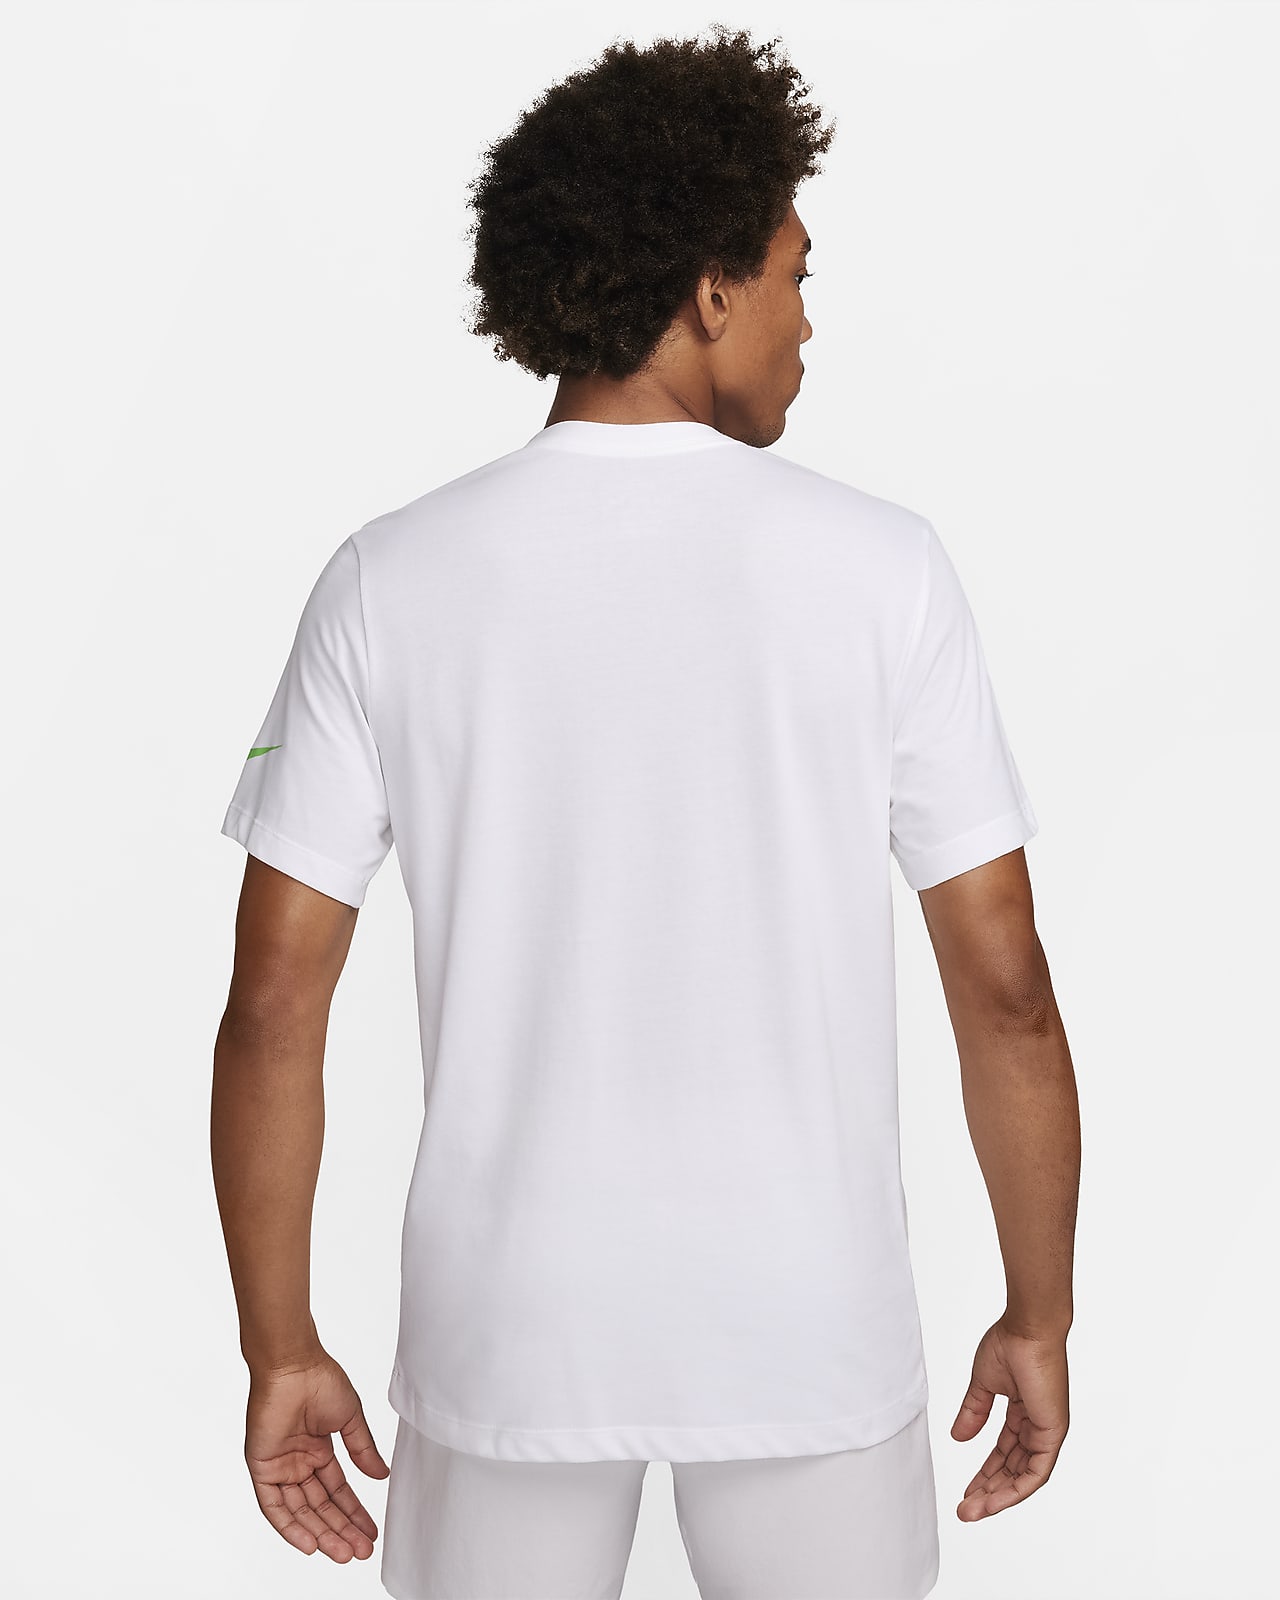 Nike Court Dri-FIT Rafa Men's Tennis T-Shirt - Deep Jungle